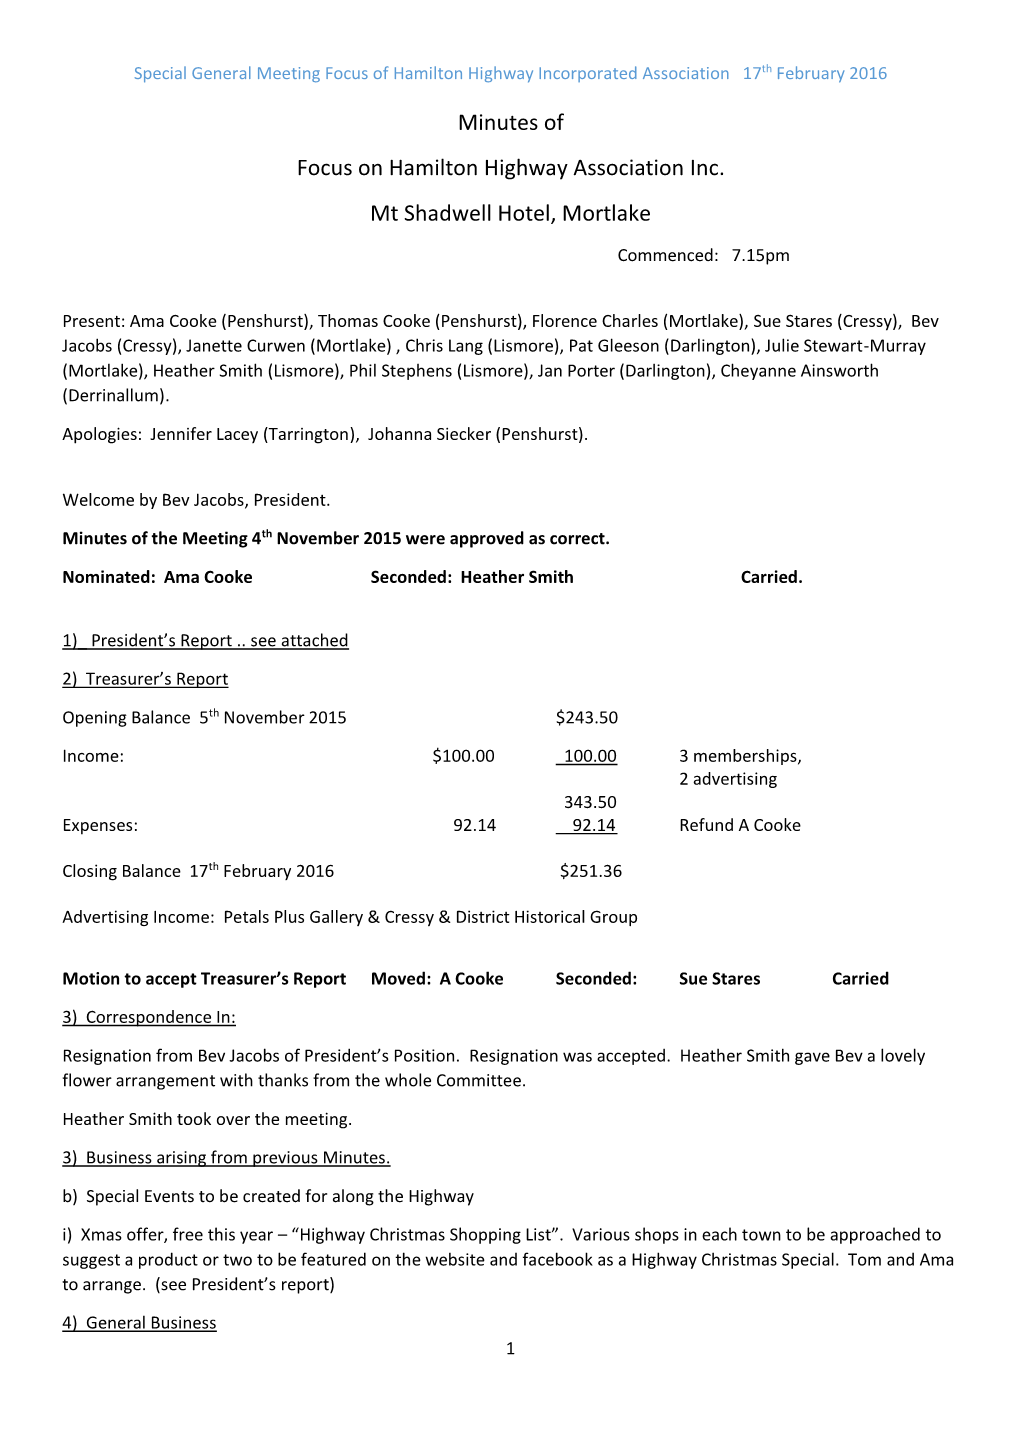 Minutes of Focus on Hamilton Highway Association Inc. Mt Shadwell Hotel, Mortlake